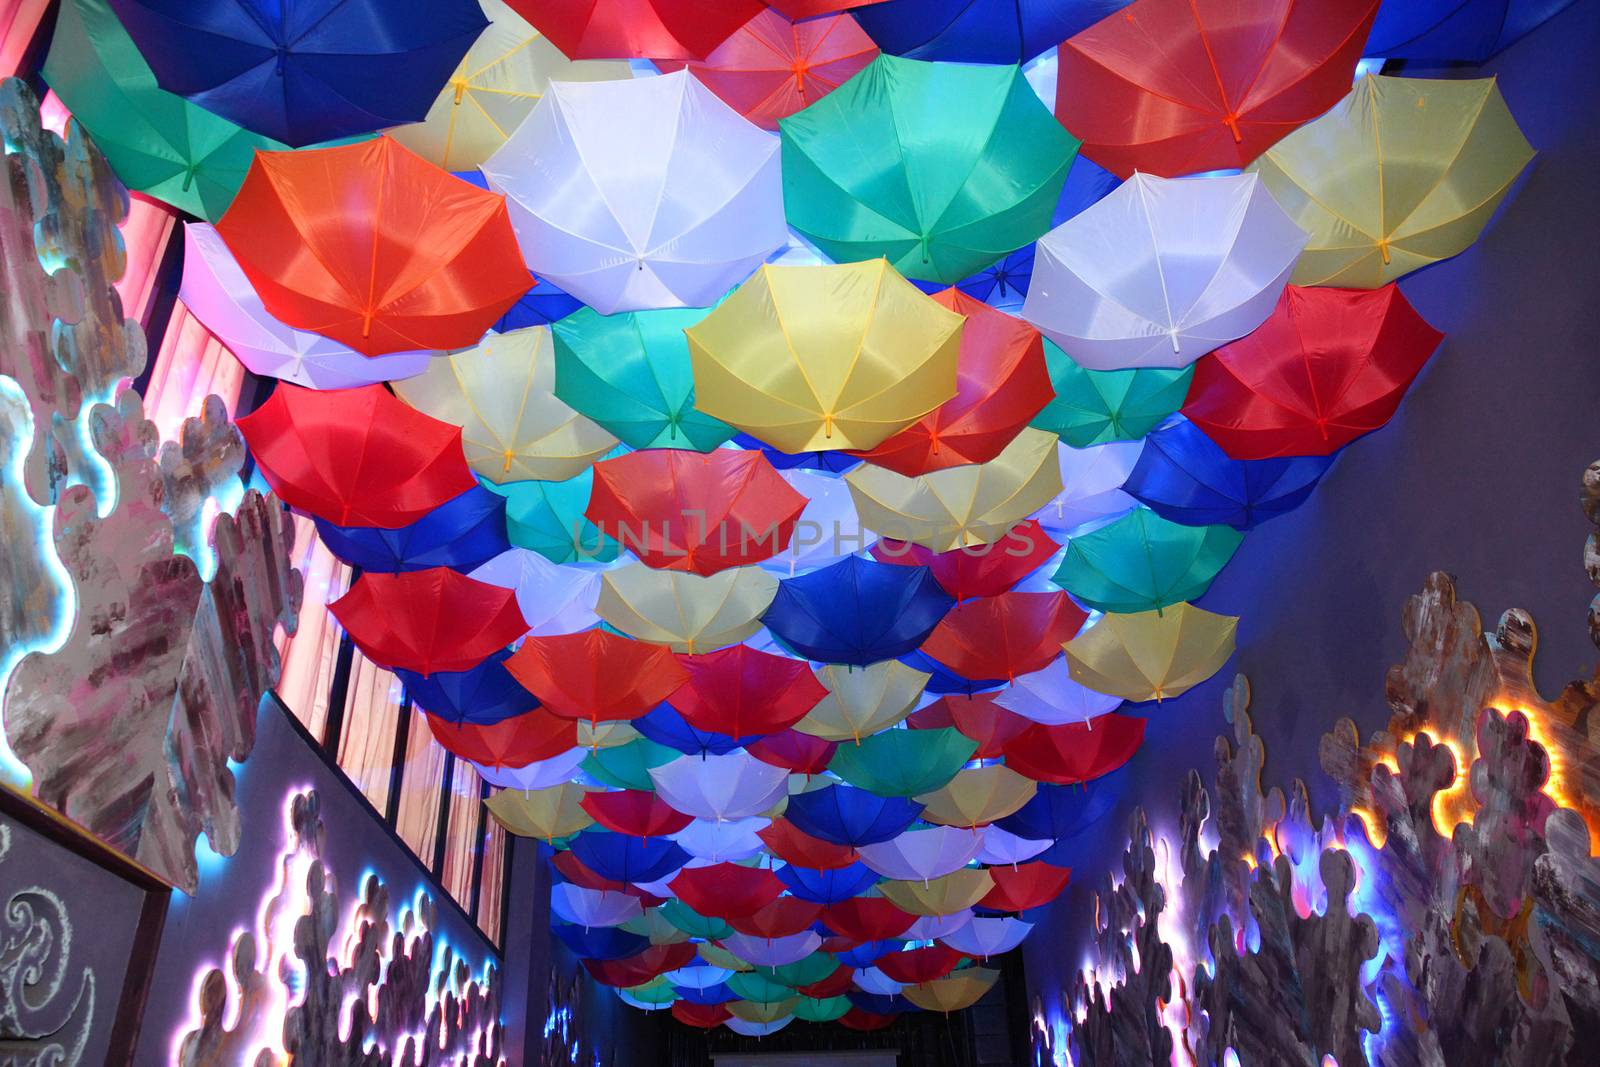 Background of colorful umbrellas by olga_zinovskaya